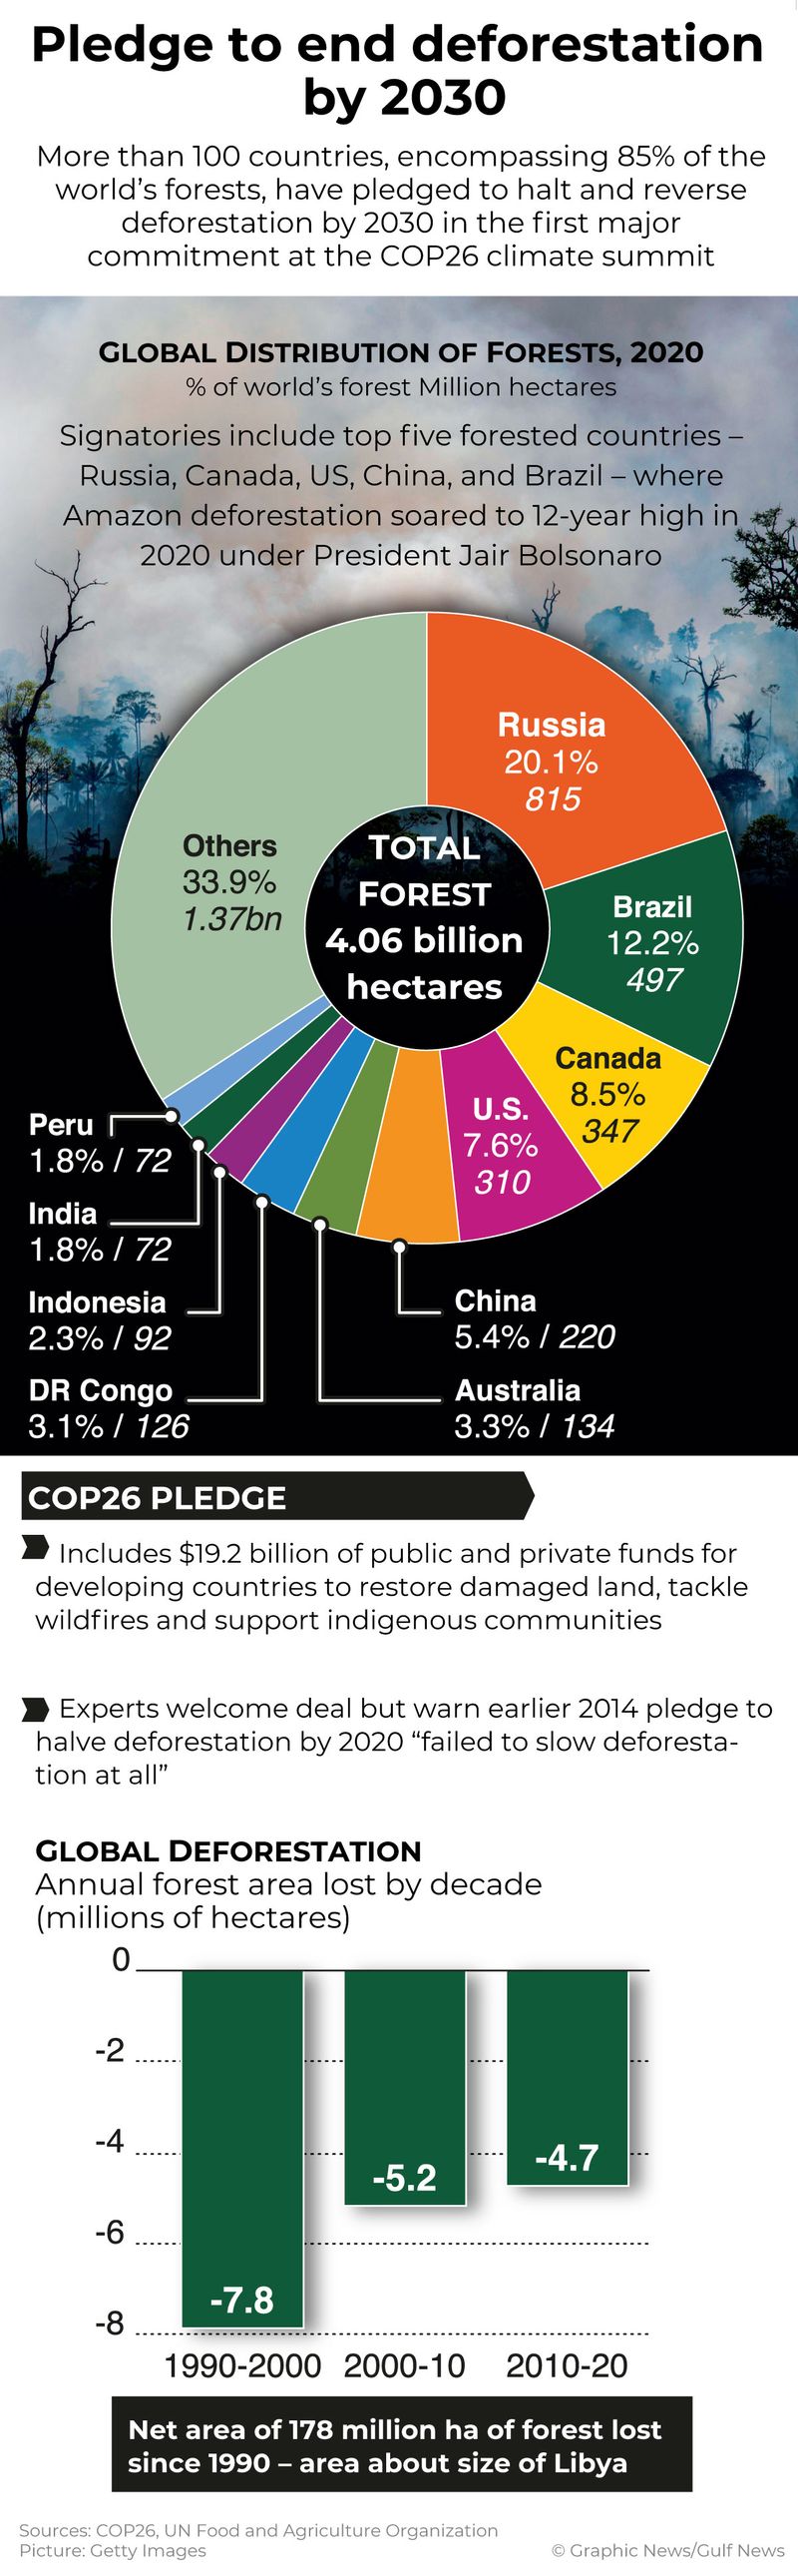 Nations pledge to end deforestation